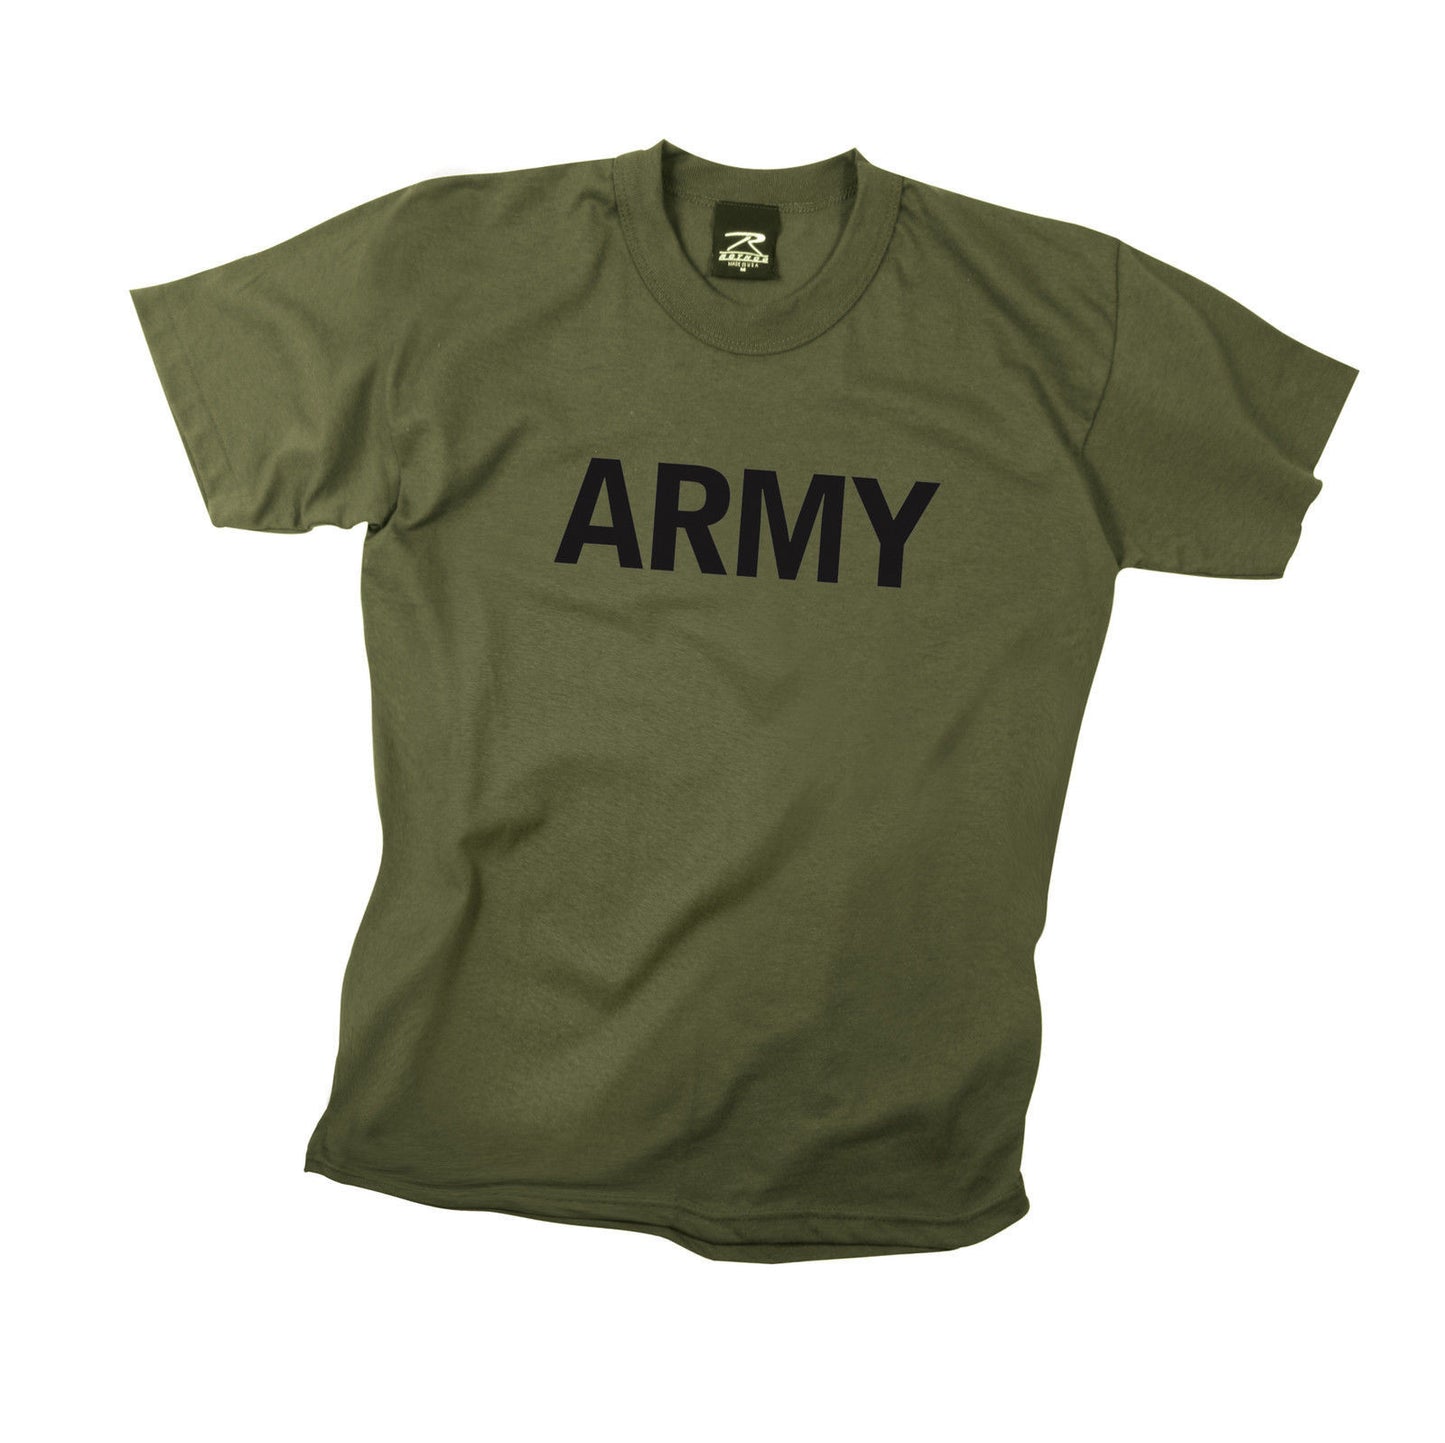 Kids "Army" T-Shirt - Olive Drab With Black Print